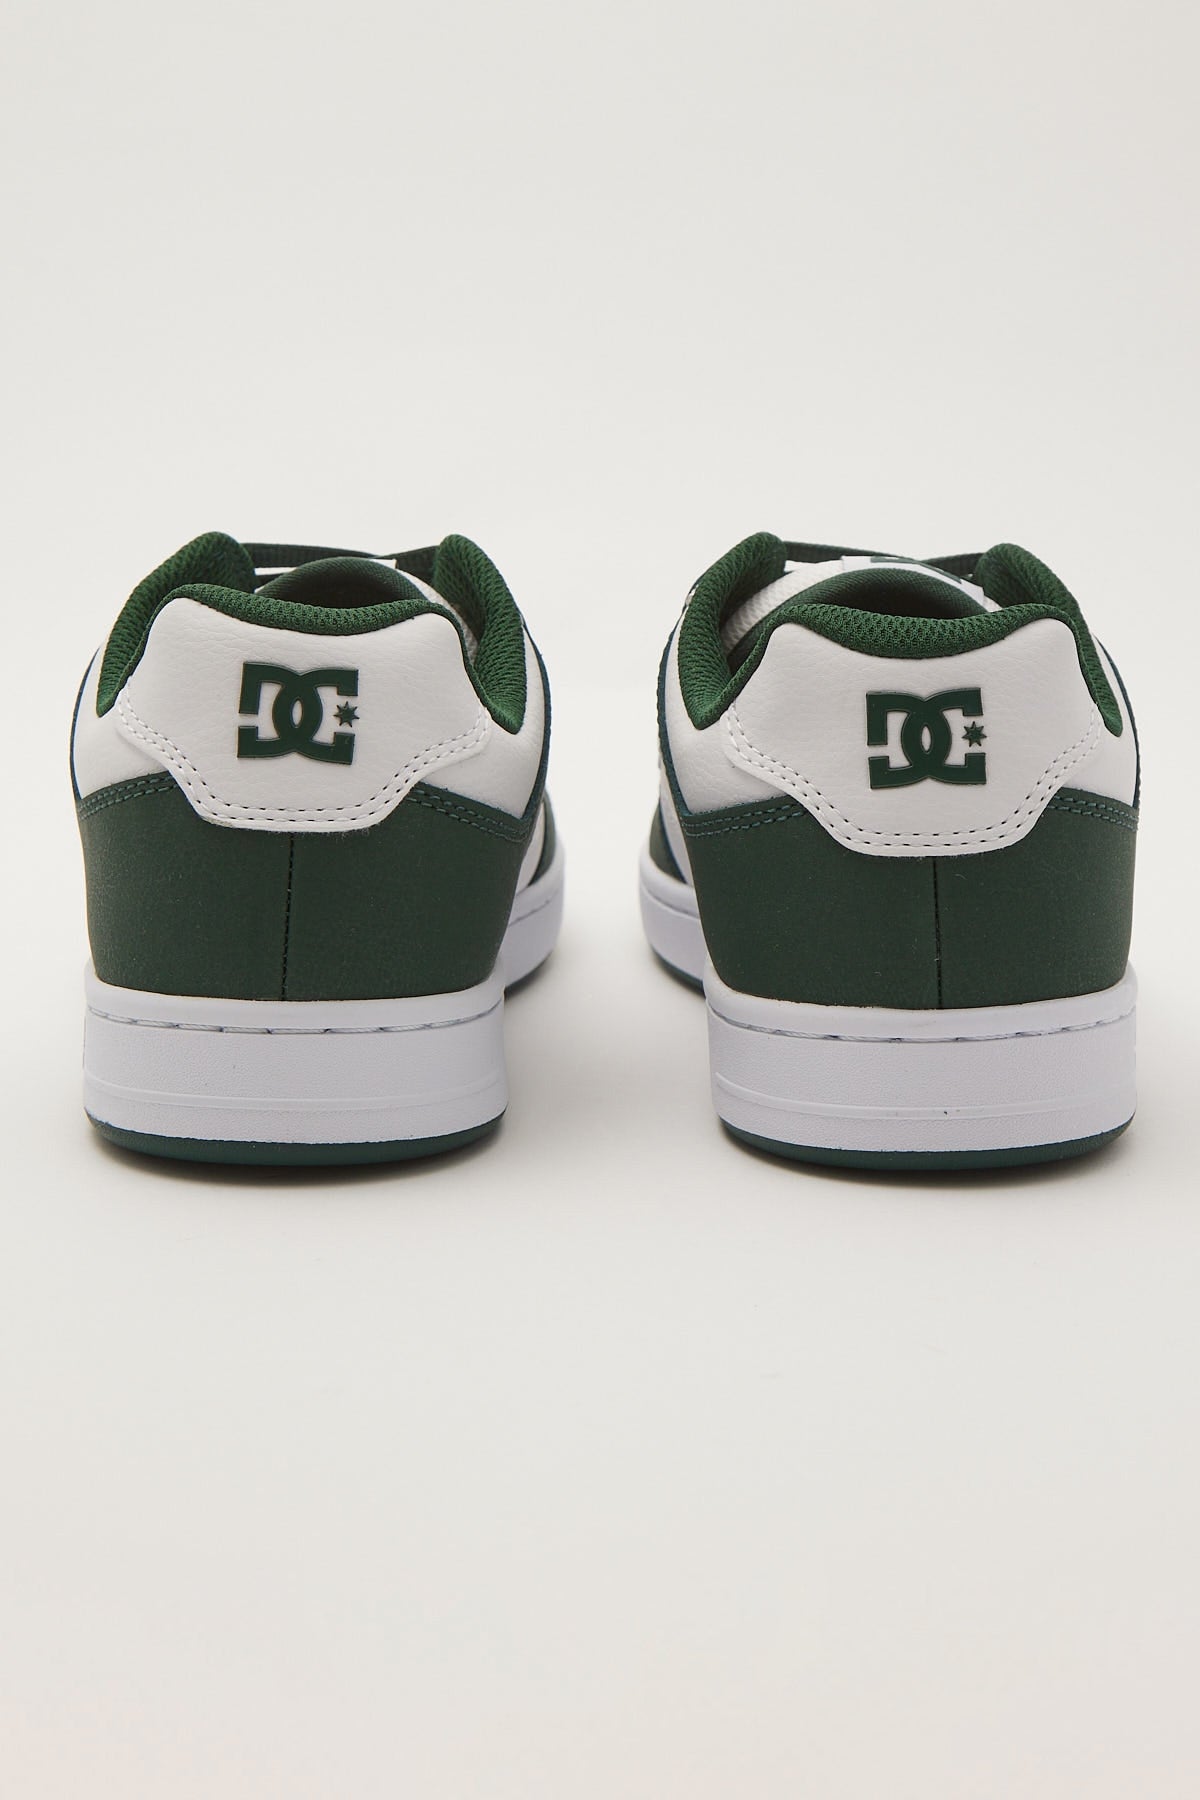 Dc Shoes Manteca 4 White/Green